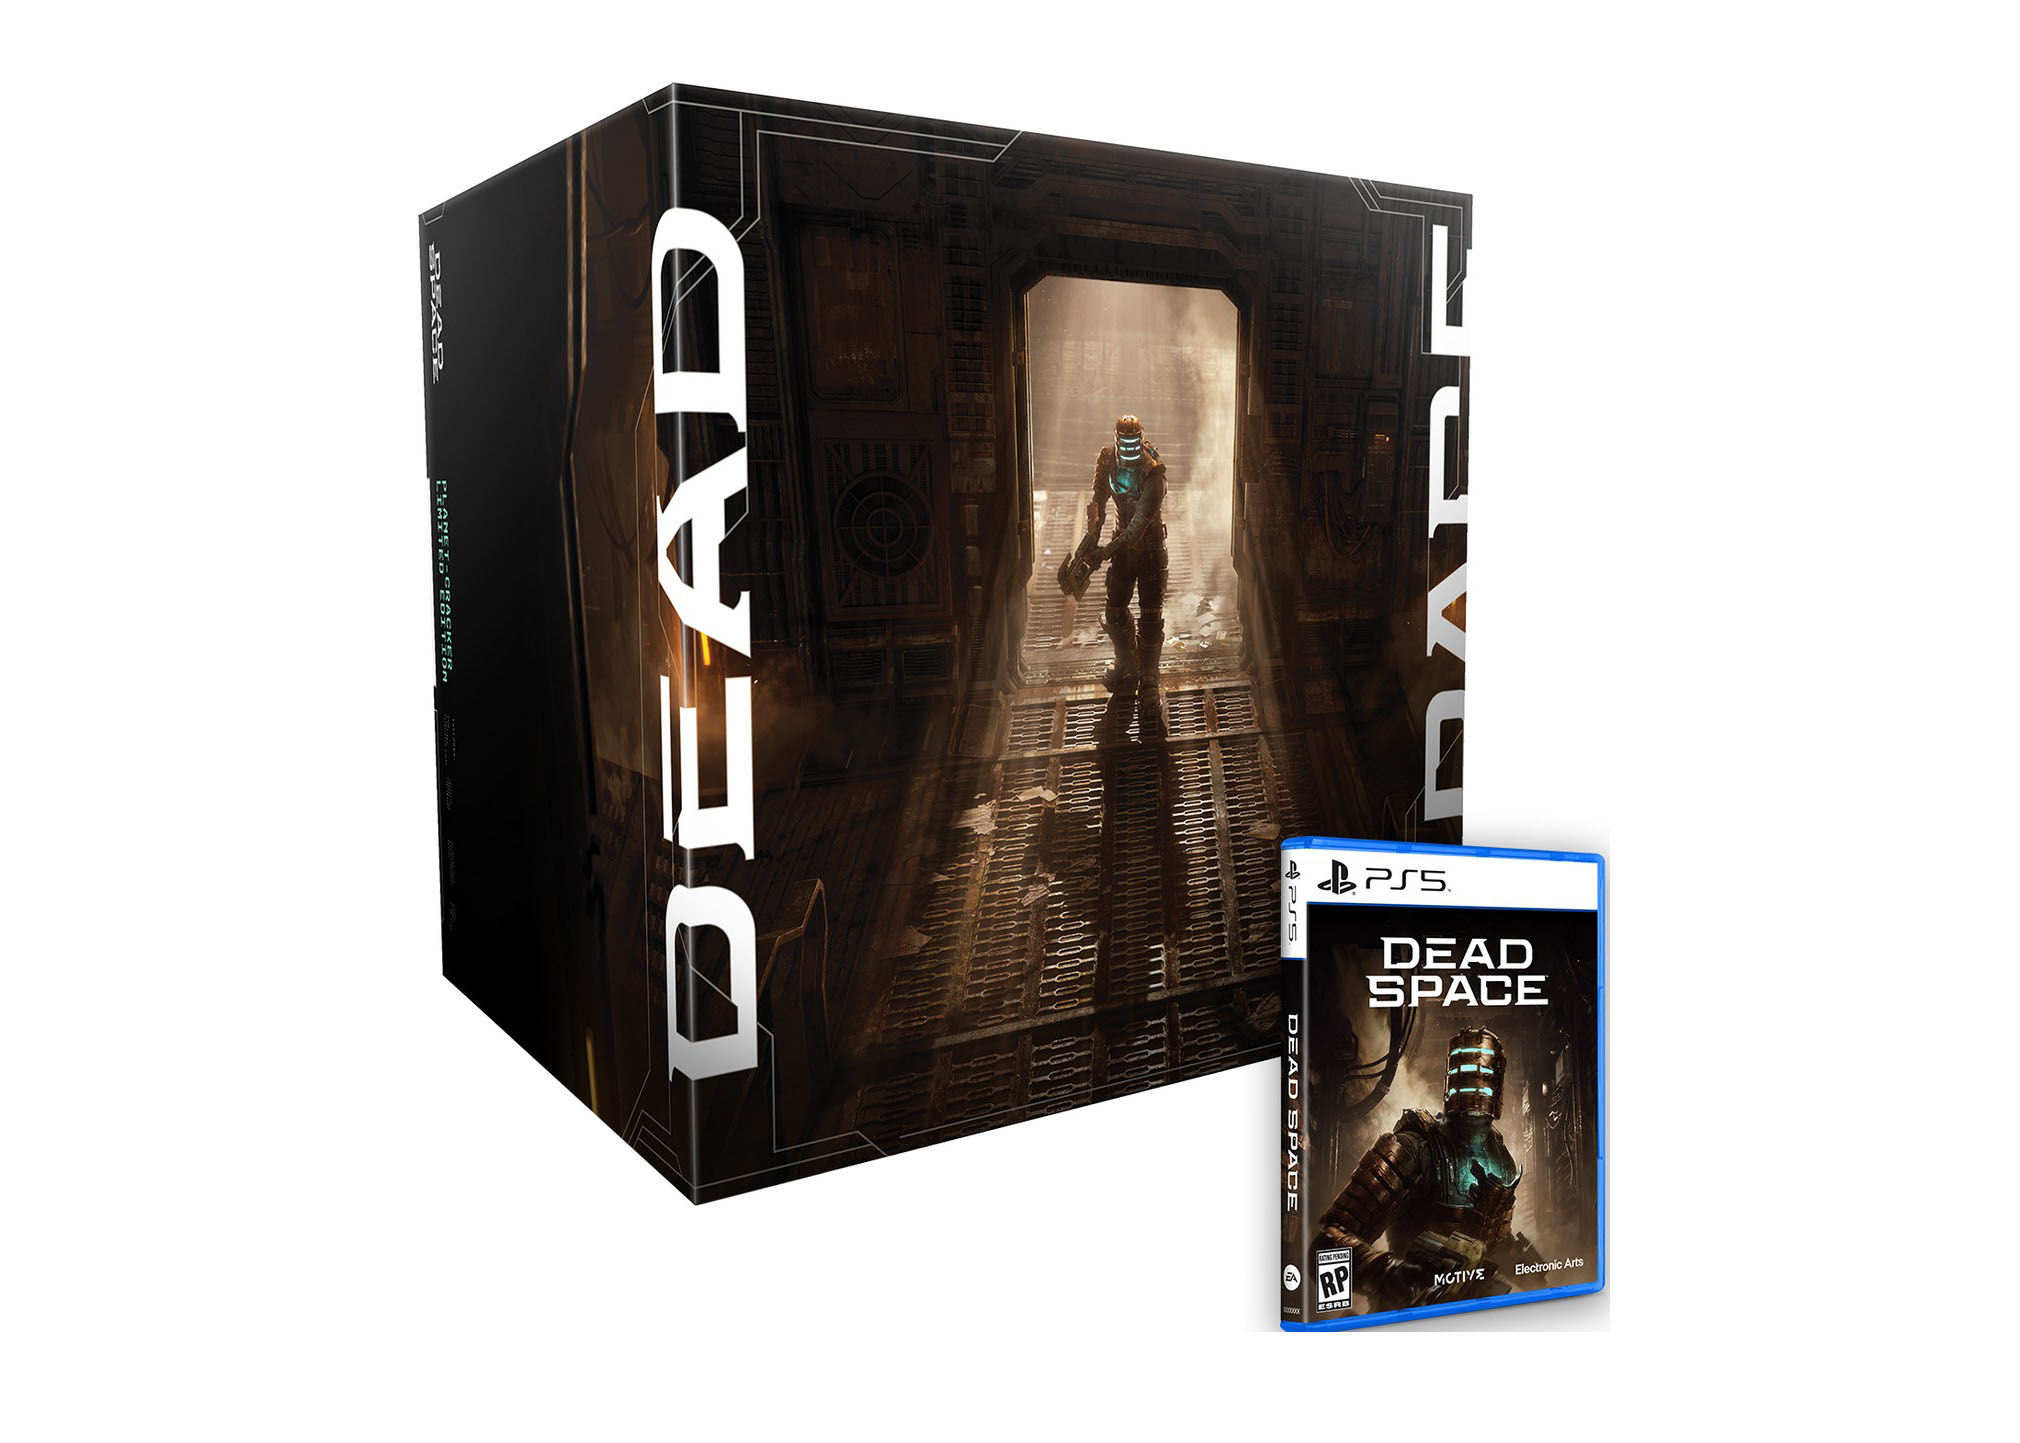 EA Sports PS5 Dead Space Collector's Edition Vidoe Game Bundle - JP